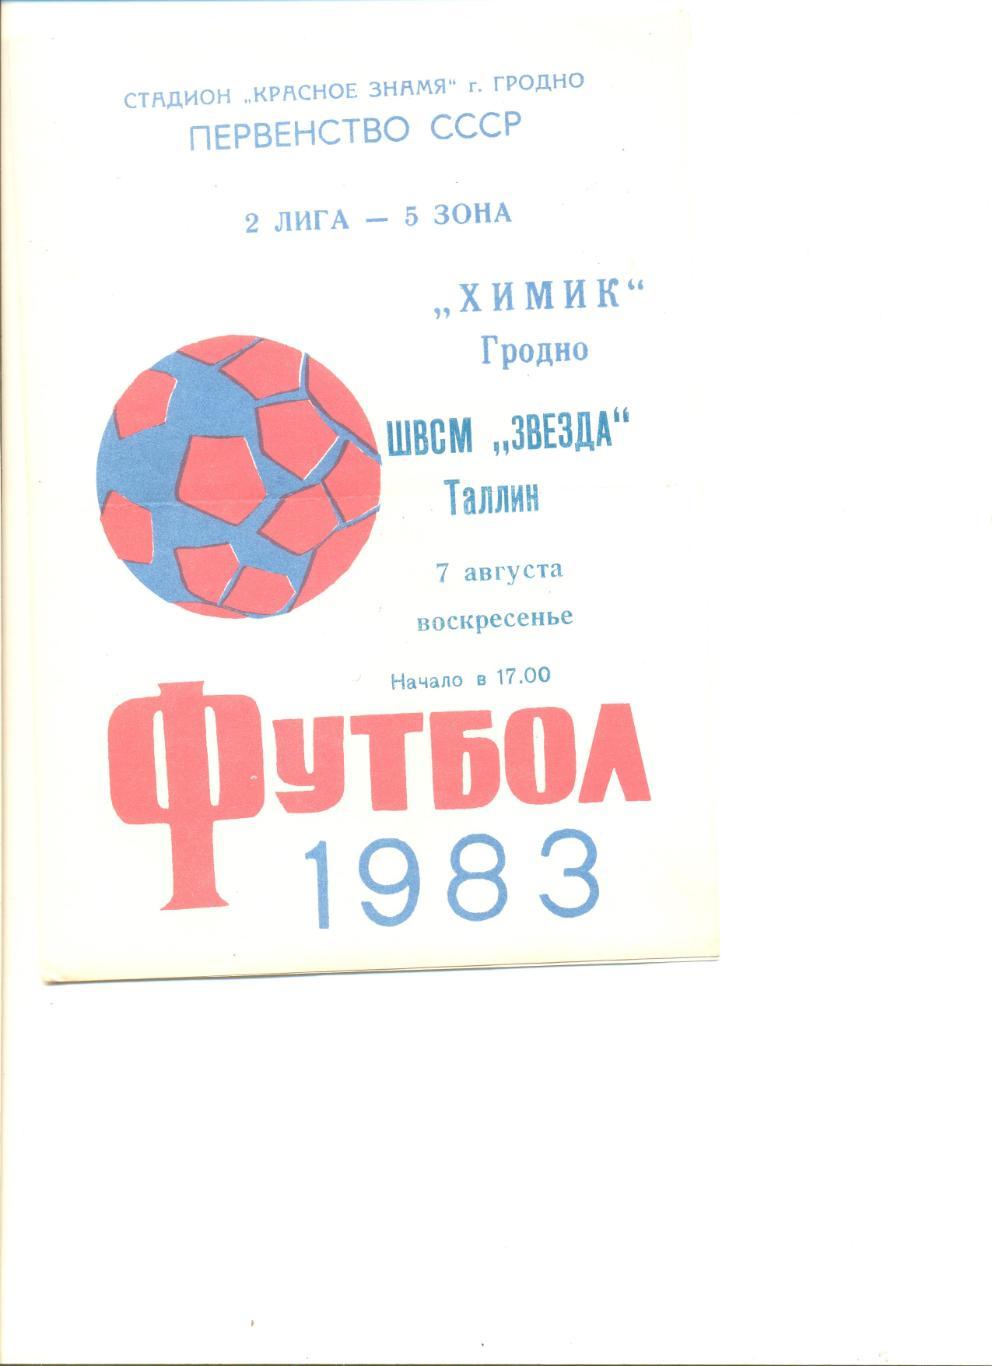 Химик Гродно - ШВСМ Таллин 07.08.1983 г.